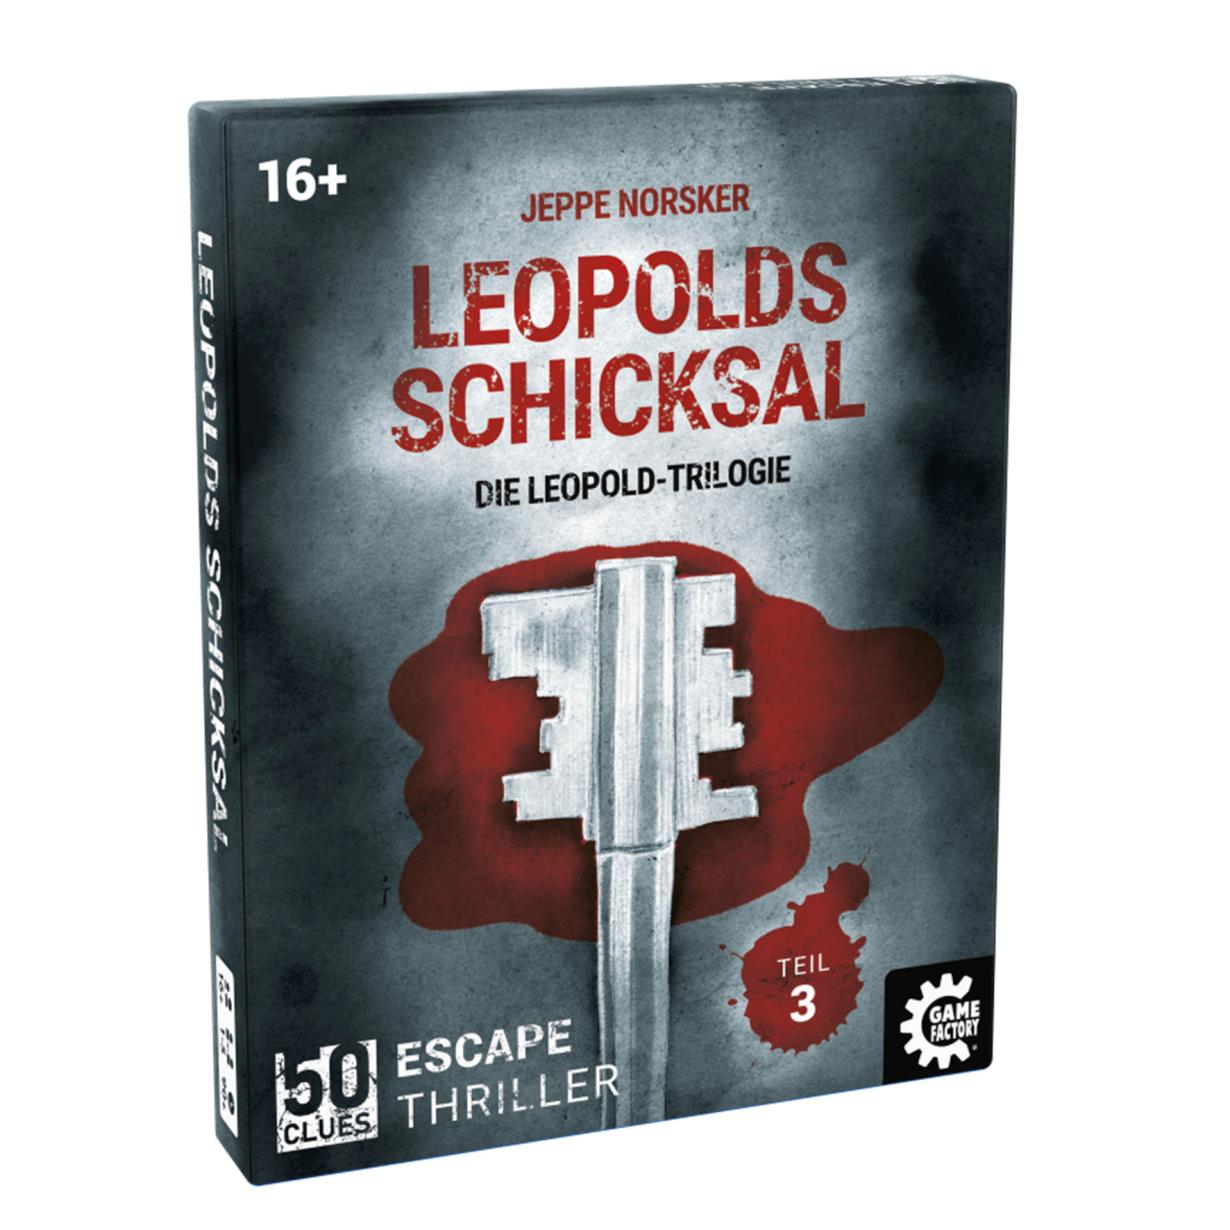 50 Clues - Leopolds Schicksal (Leopold Trilogie III)